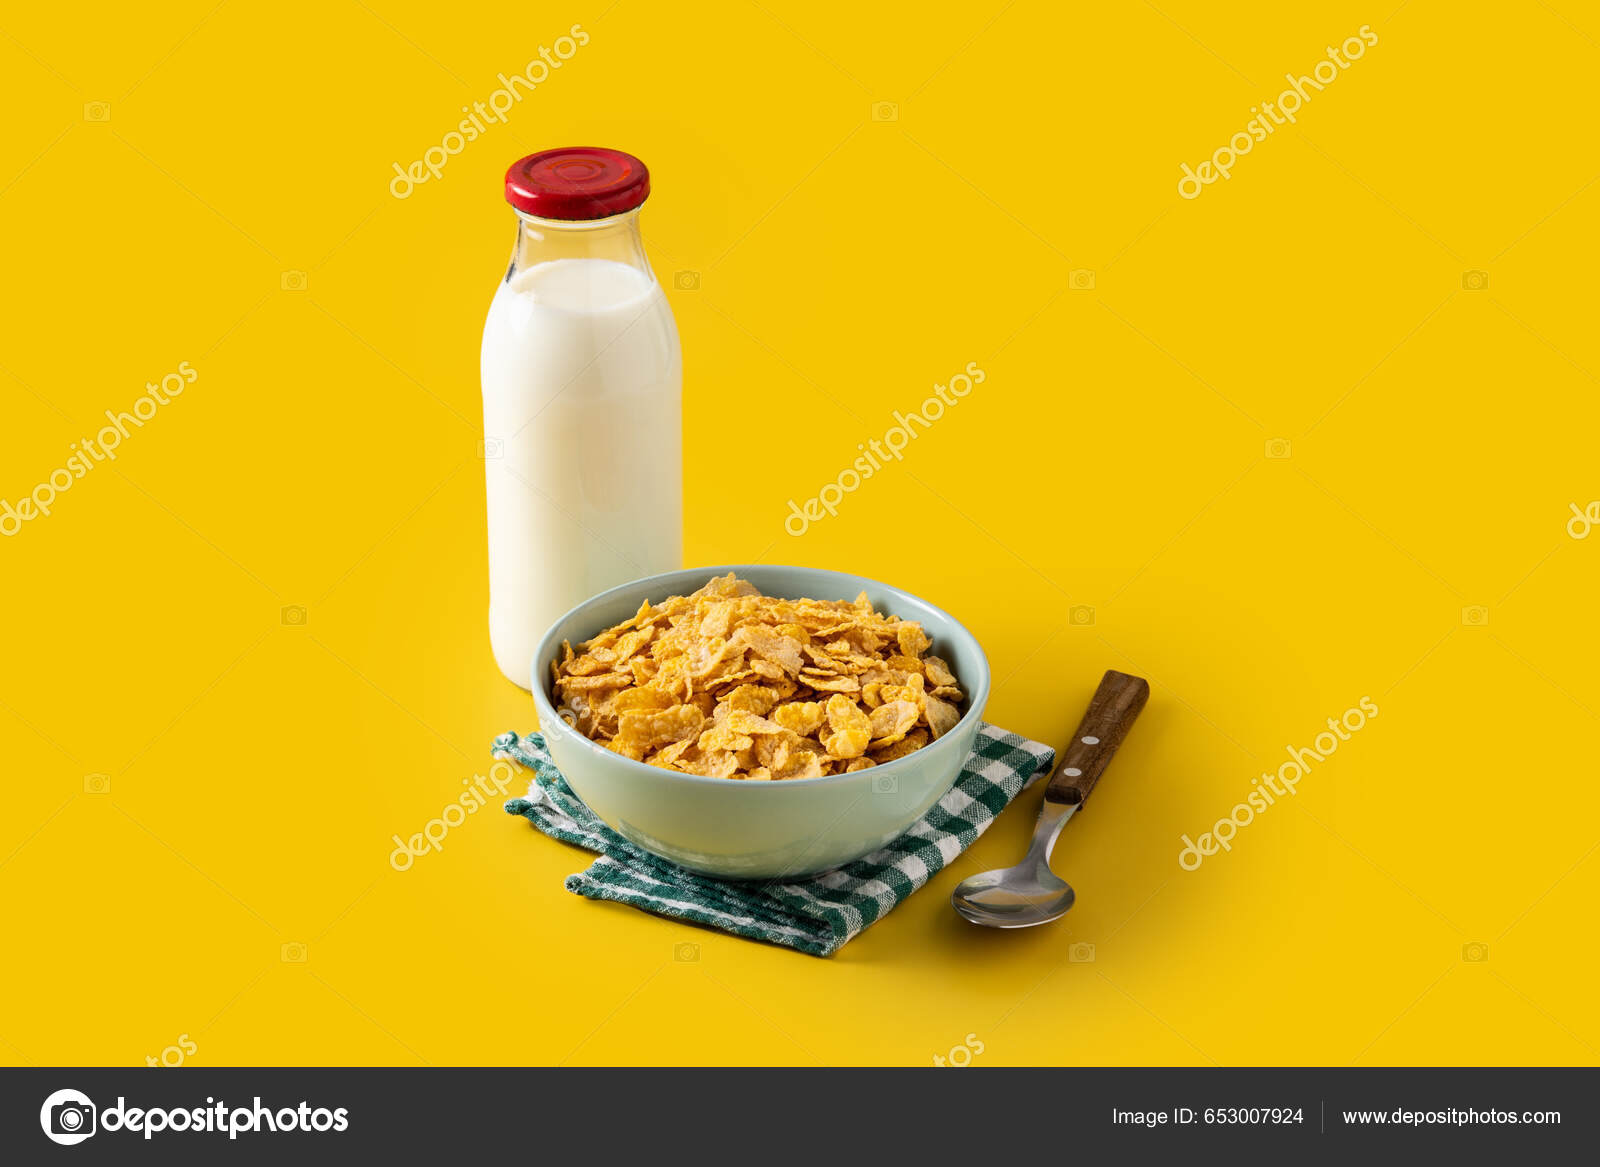 https://st5.depositphotos.com/2593537/65300/i/1600/depositphotos_653007924-stock-photo-bowl-cereals-milk-bottle-breakfast.jpg